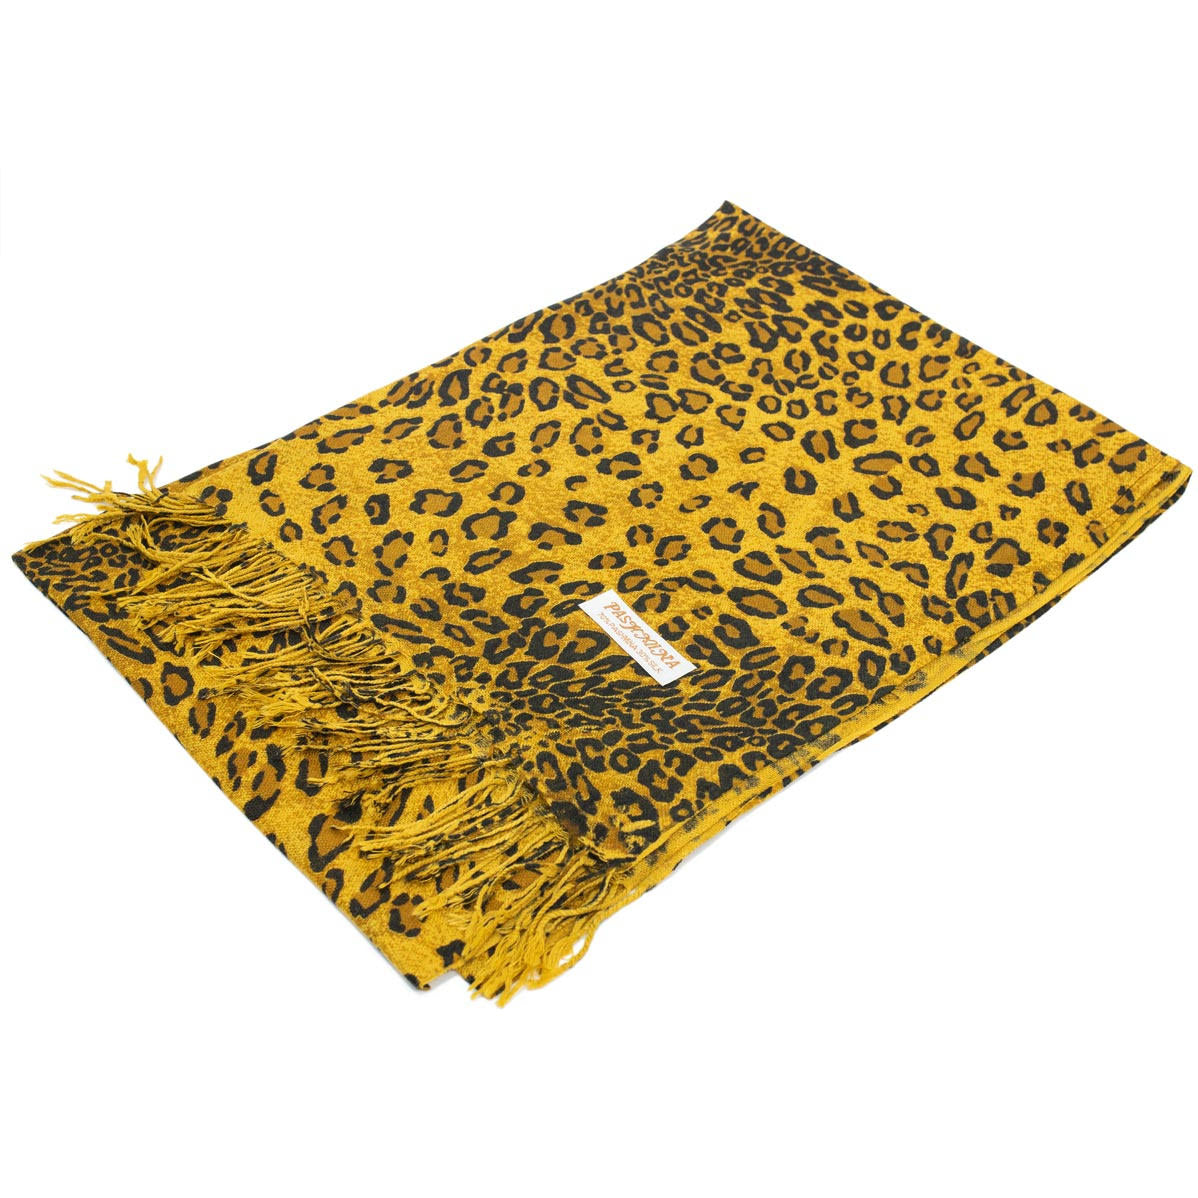 W057-1B Leopard Print Pashmina Shawl Brown/Gold